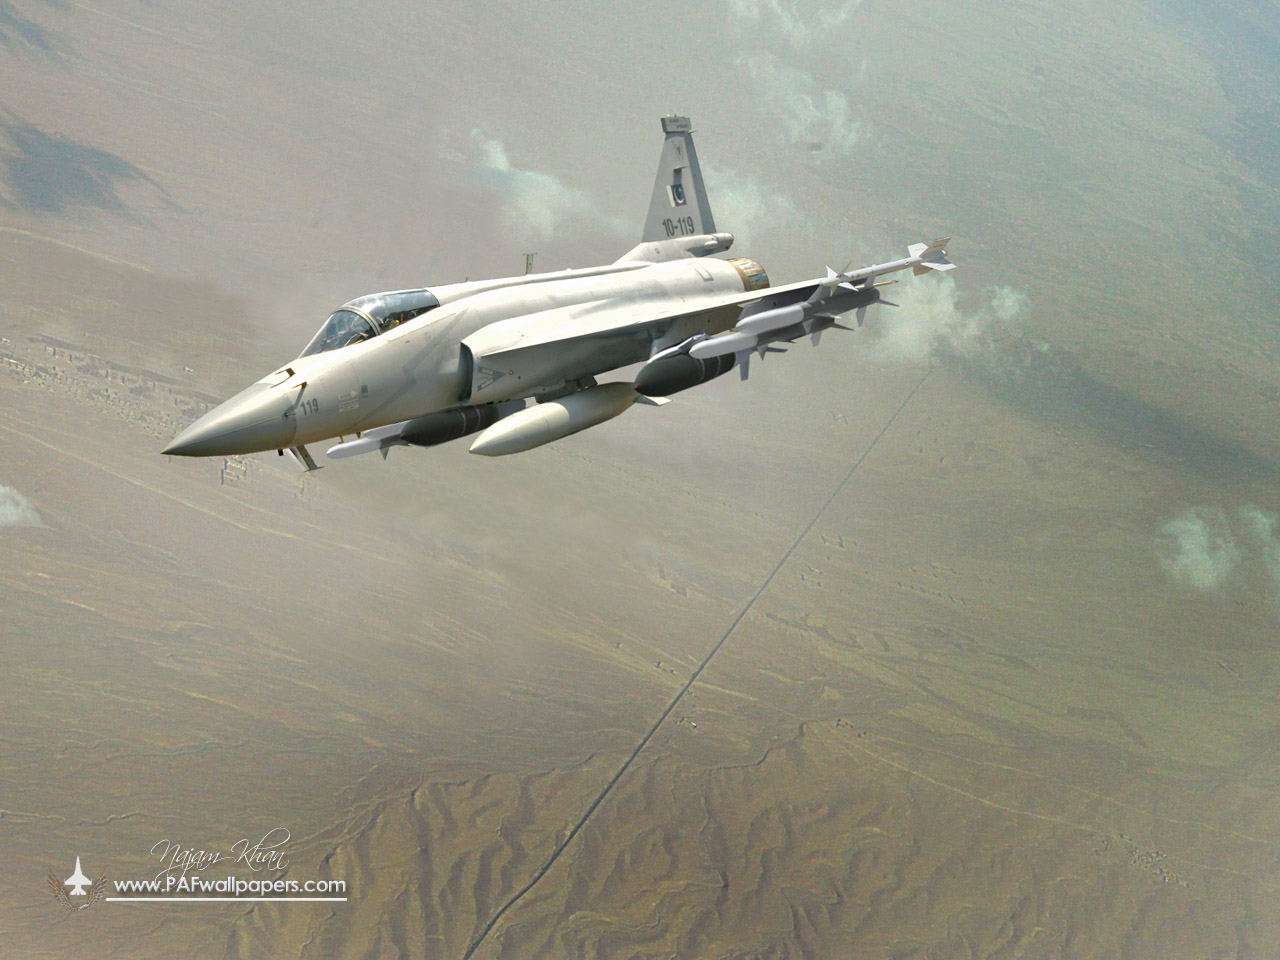 jf-17_thunder_ls-6_glide_guided_bomb_load.jpg